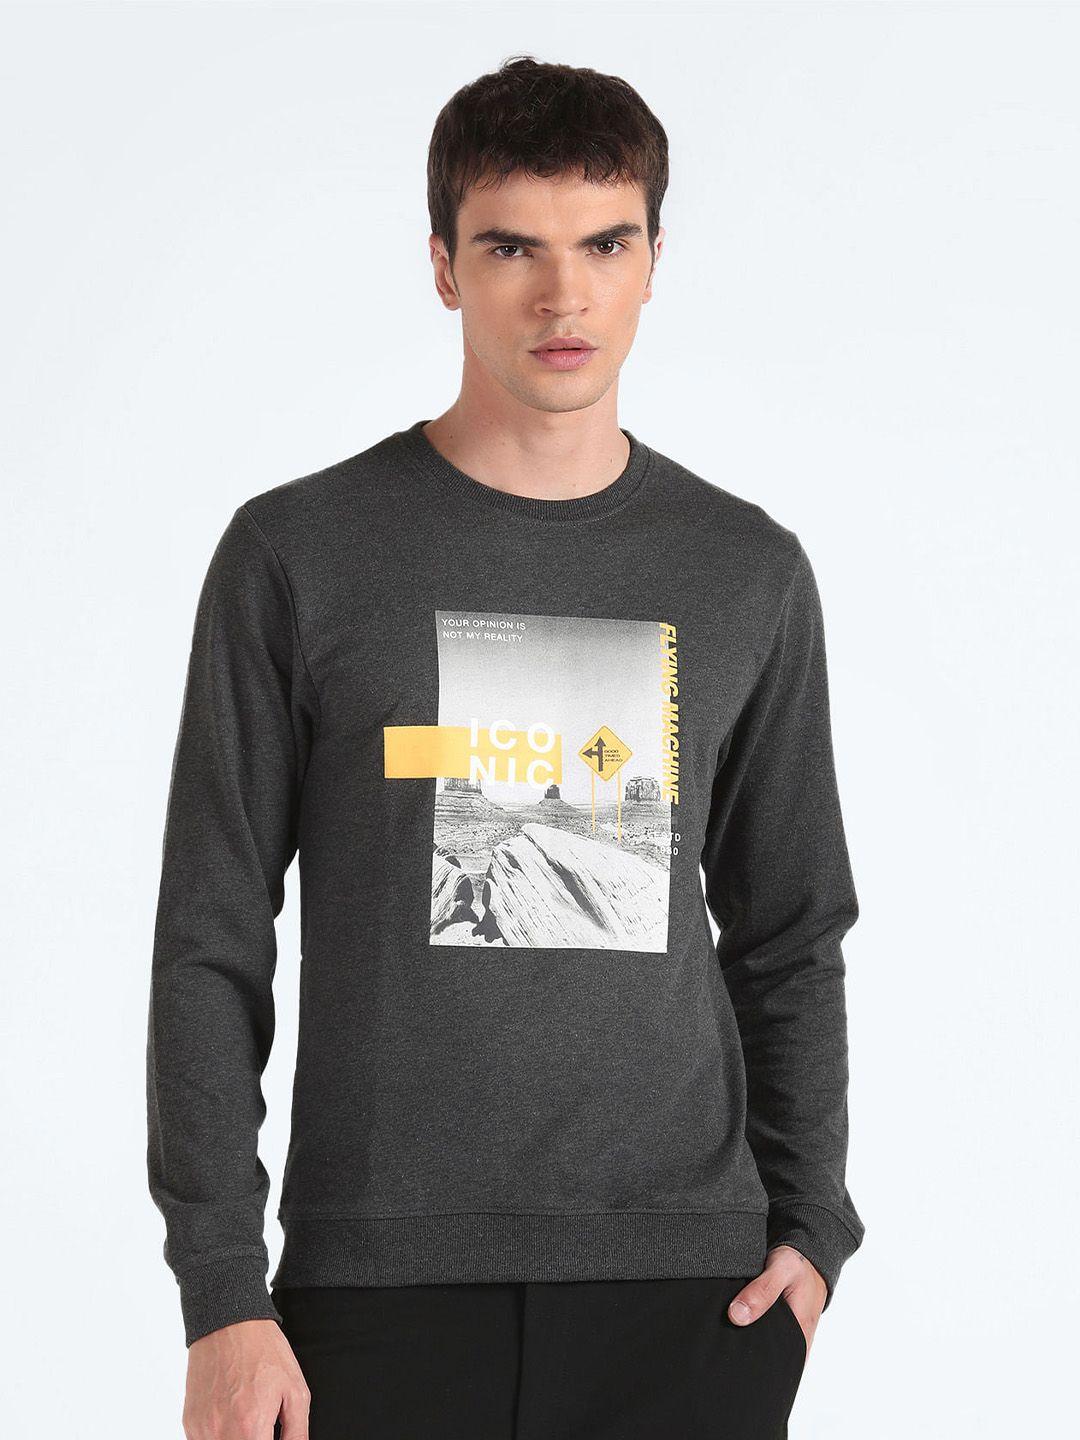 flying machine graphic printed hooded pullover sweatshirt